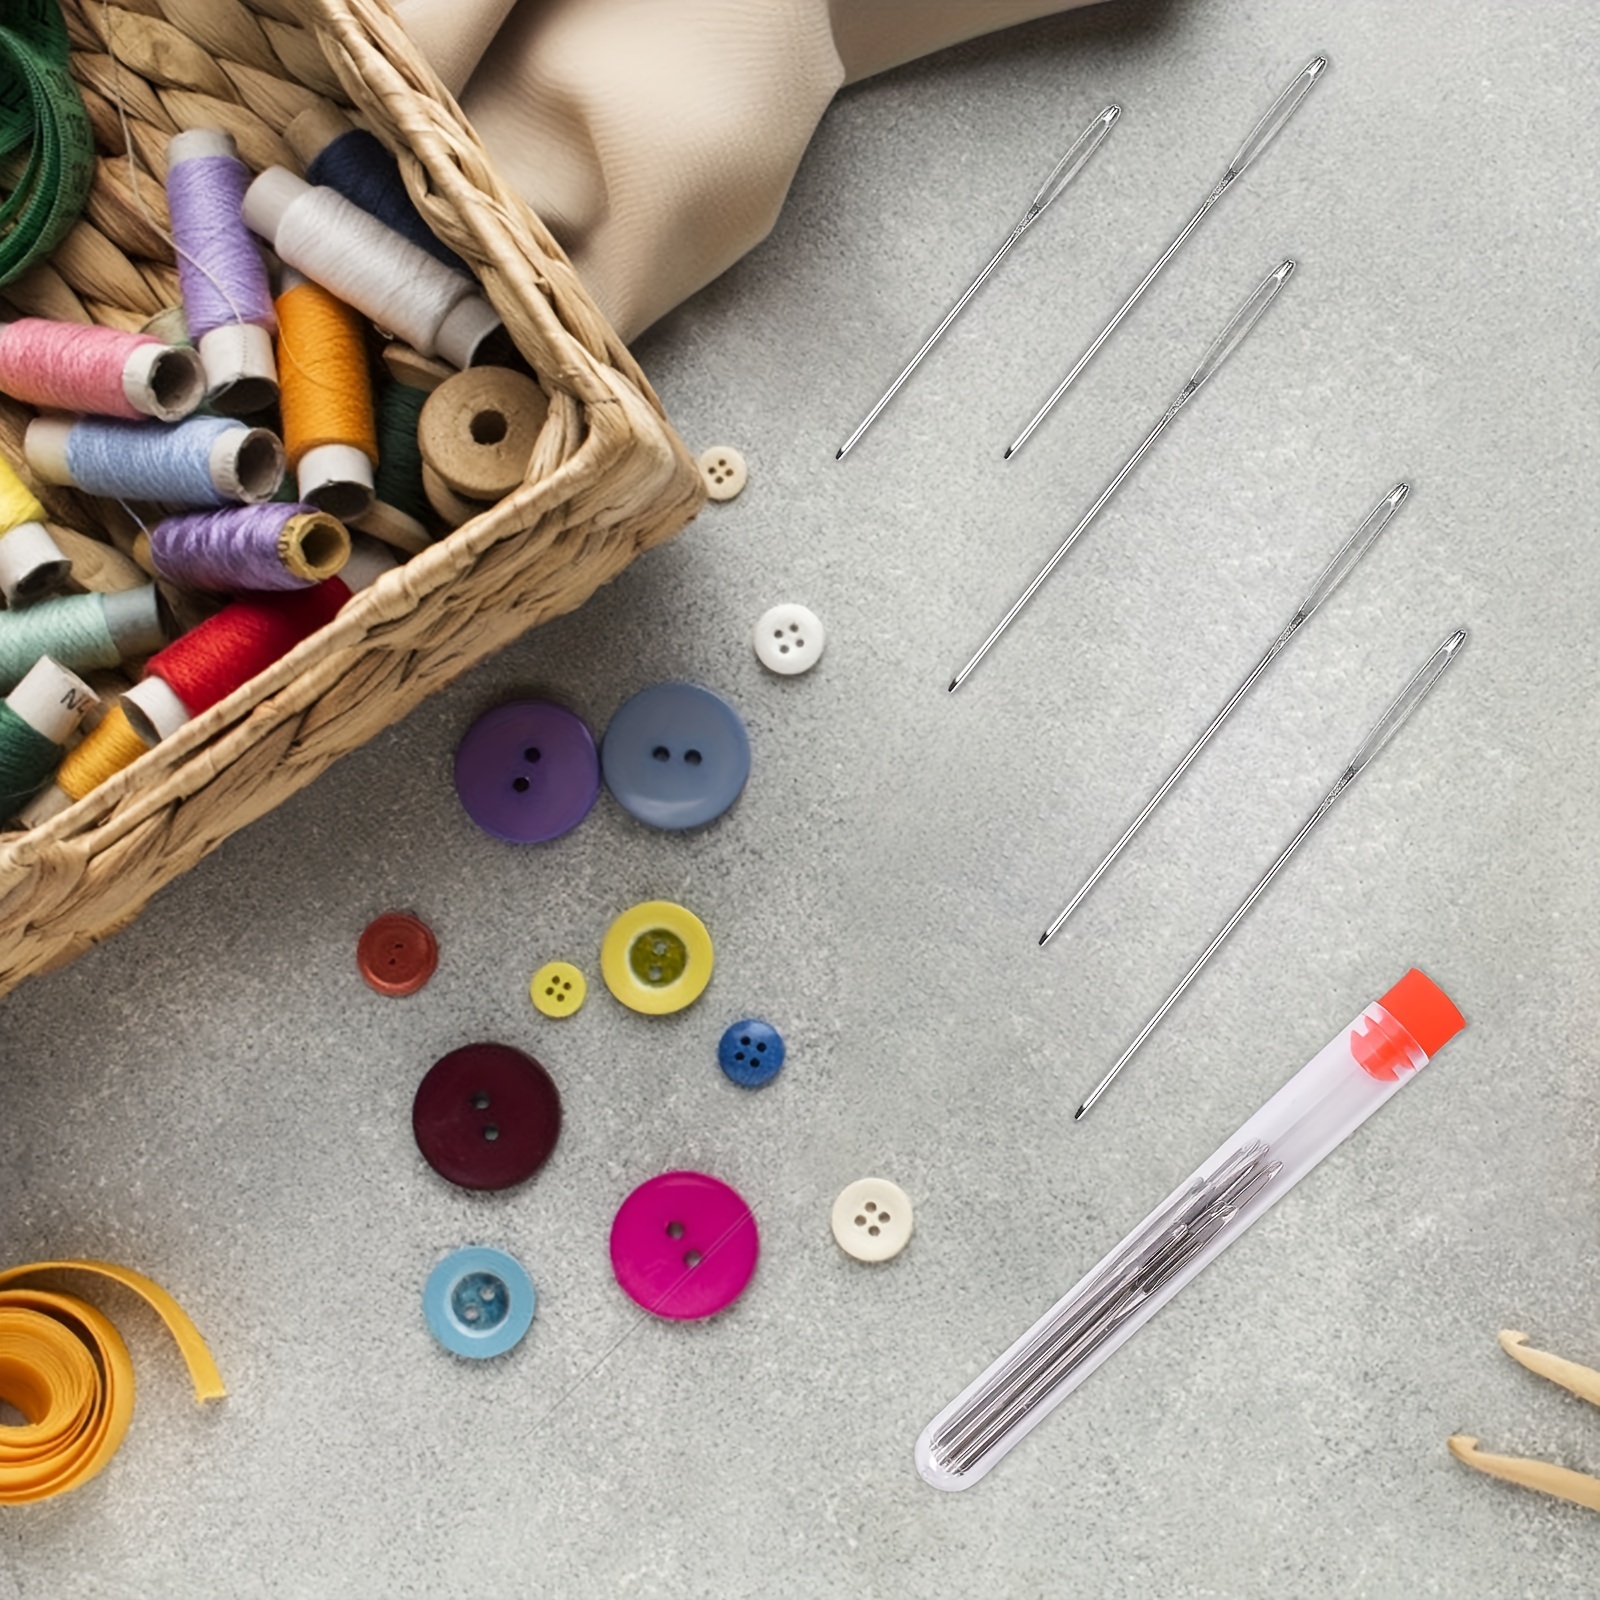 25 PCS Large Eye Sewing Needles, Sewing Sharp Needles, Stainless Steel  Embroidery Thread Needle, Handmade Yarn Knitting Needles Leather Needle :  : Arts & Crafts